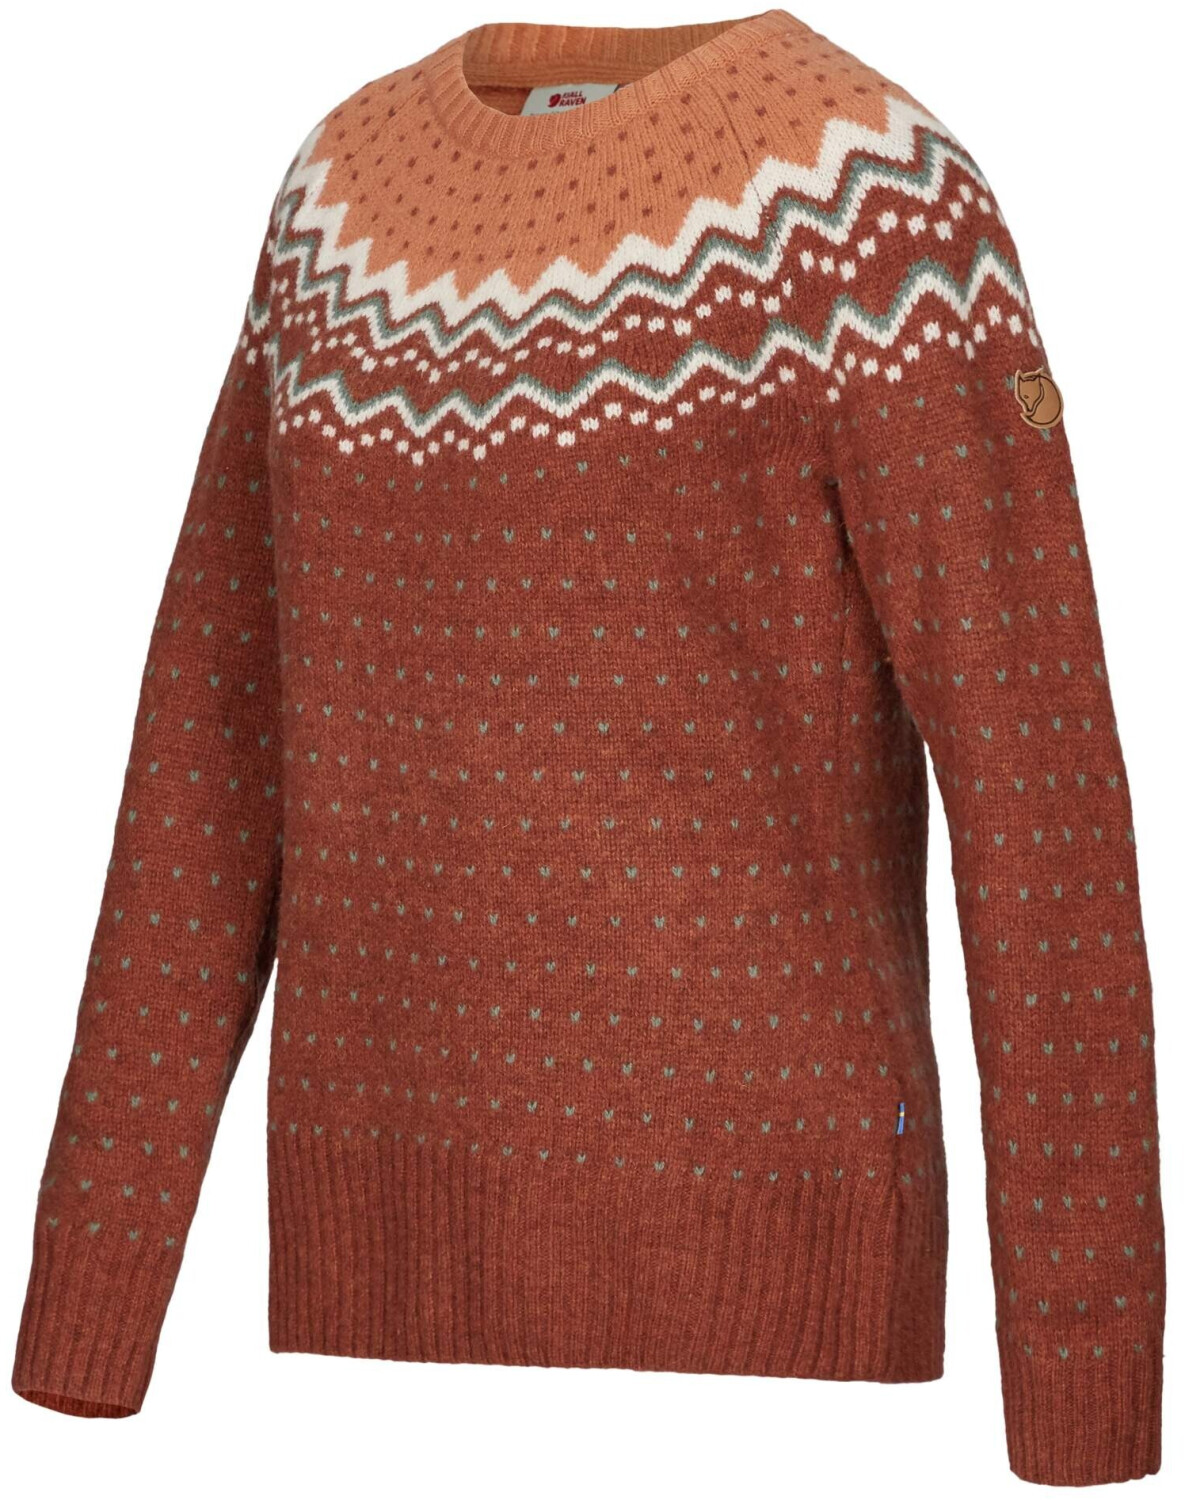 Buy Fjällräven Övik Knit Sweater W autumn leaf/desert brown from